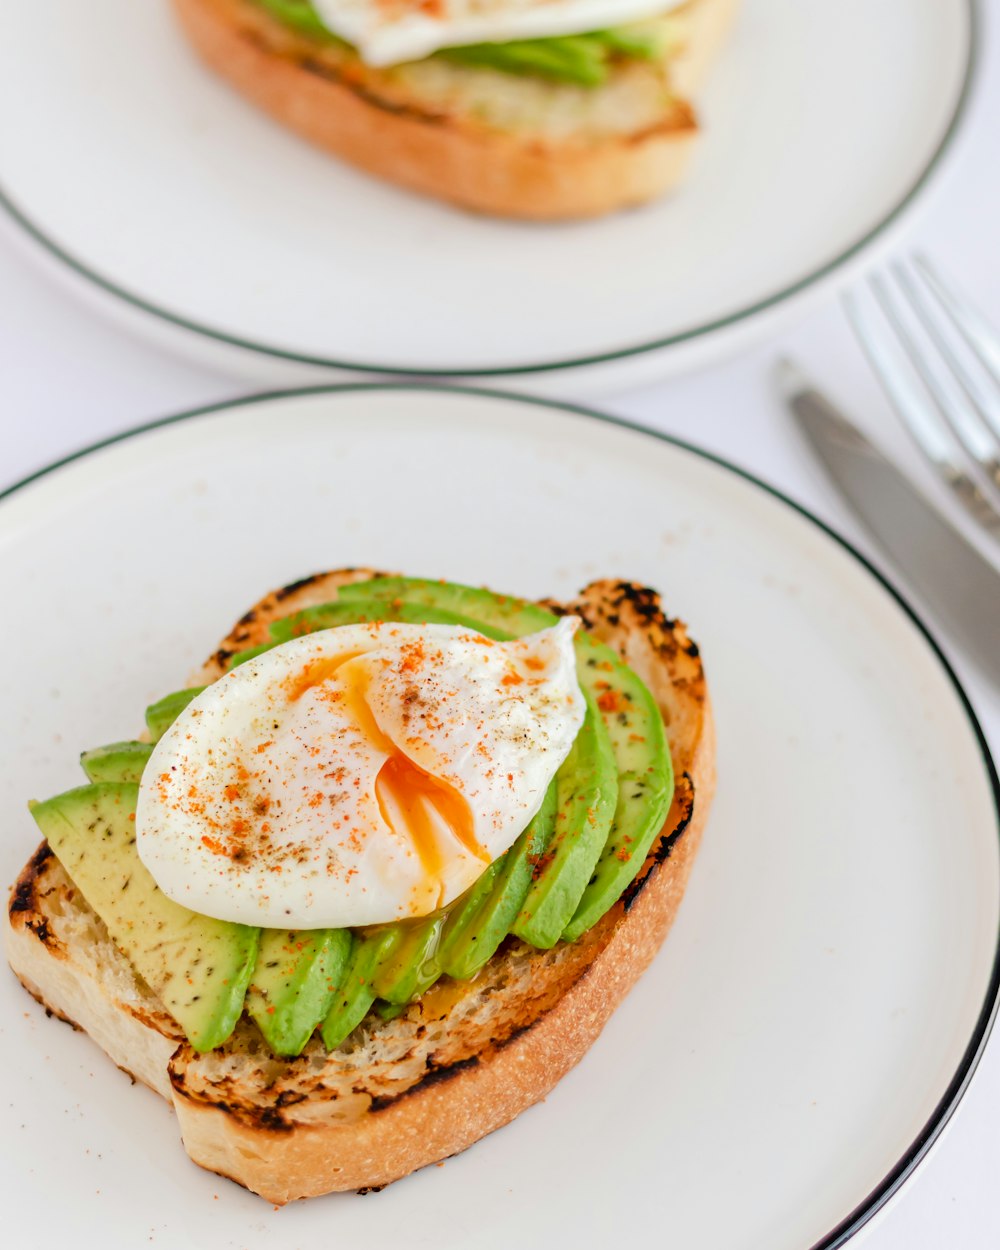 a sandwich with an egg and asparagus on it